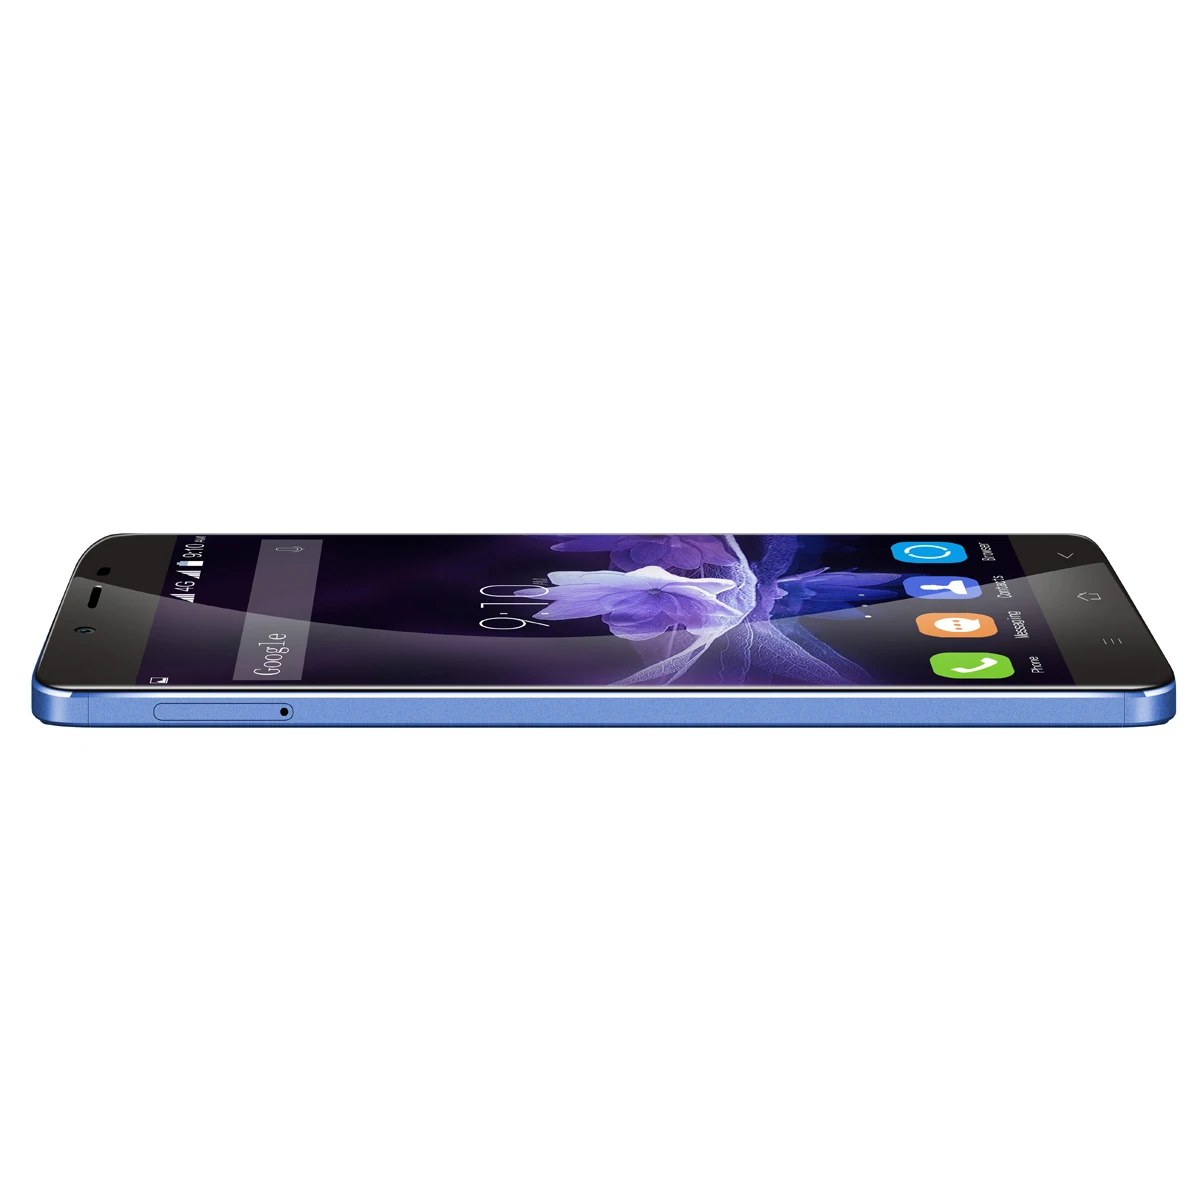 Blackview P2, мобильный телефон, 6000 мА/ч, отпечаток пальца, ID, MTK6750T, четыре ядра, 5,5 дюйма, 1080 P, 13 МП, камера, металлический корпус, 9V2A, быстрая зарядка